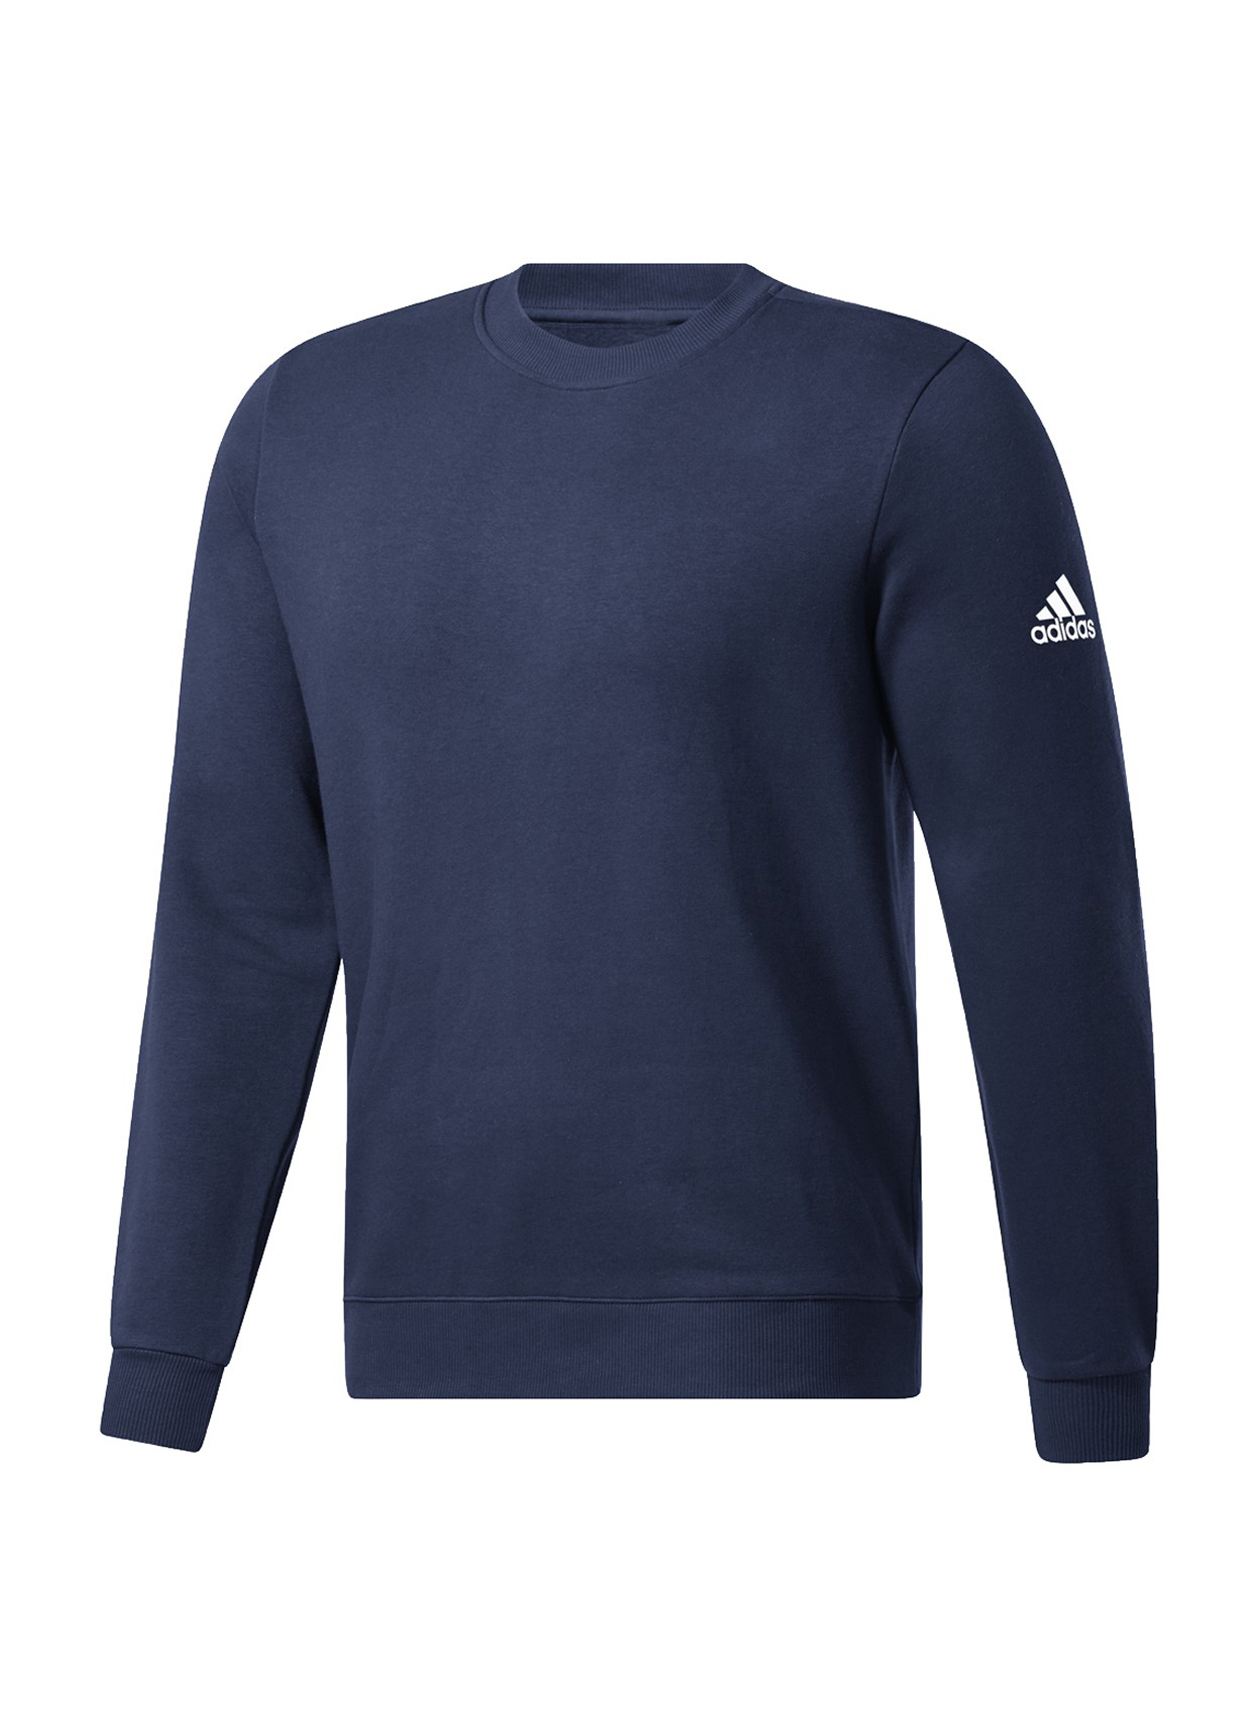 Adidas AD134 - Men's Crew Sweatshirt